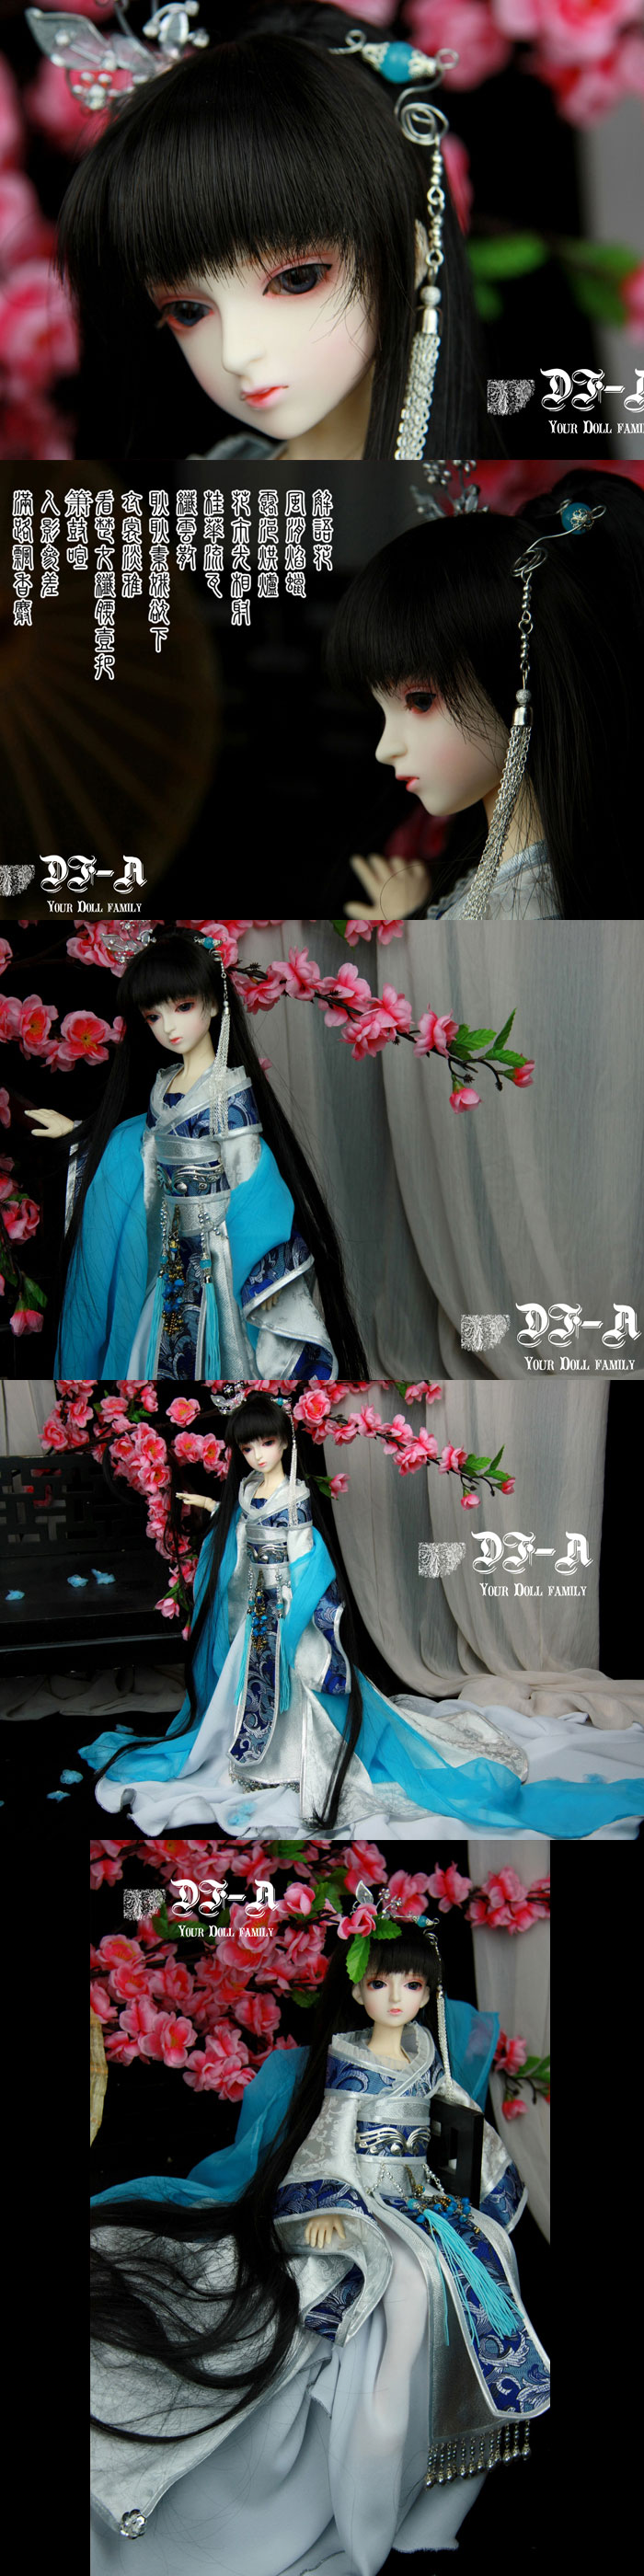 BJD Xueyi 45cm Girl Ball-jointed doll